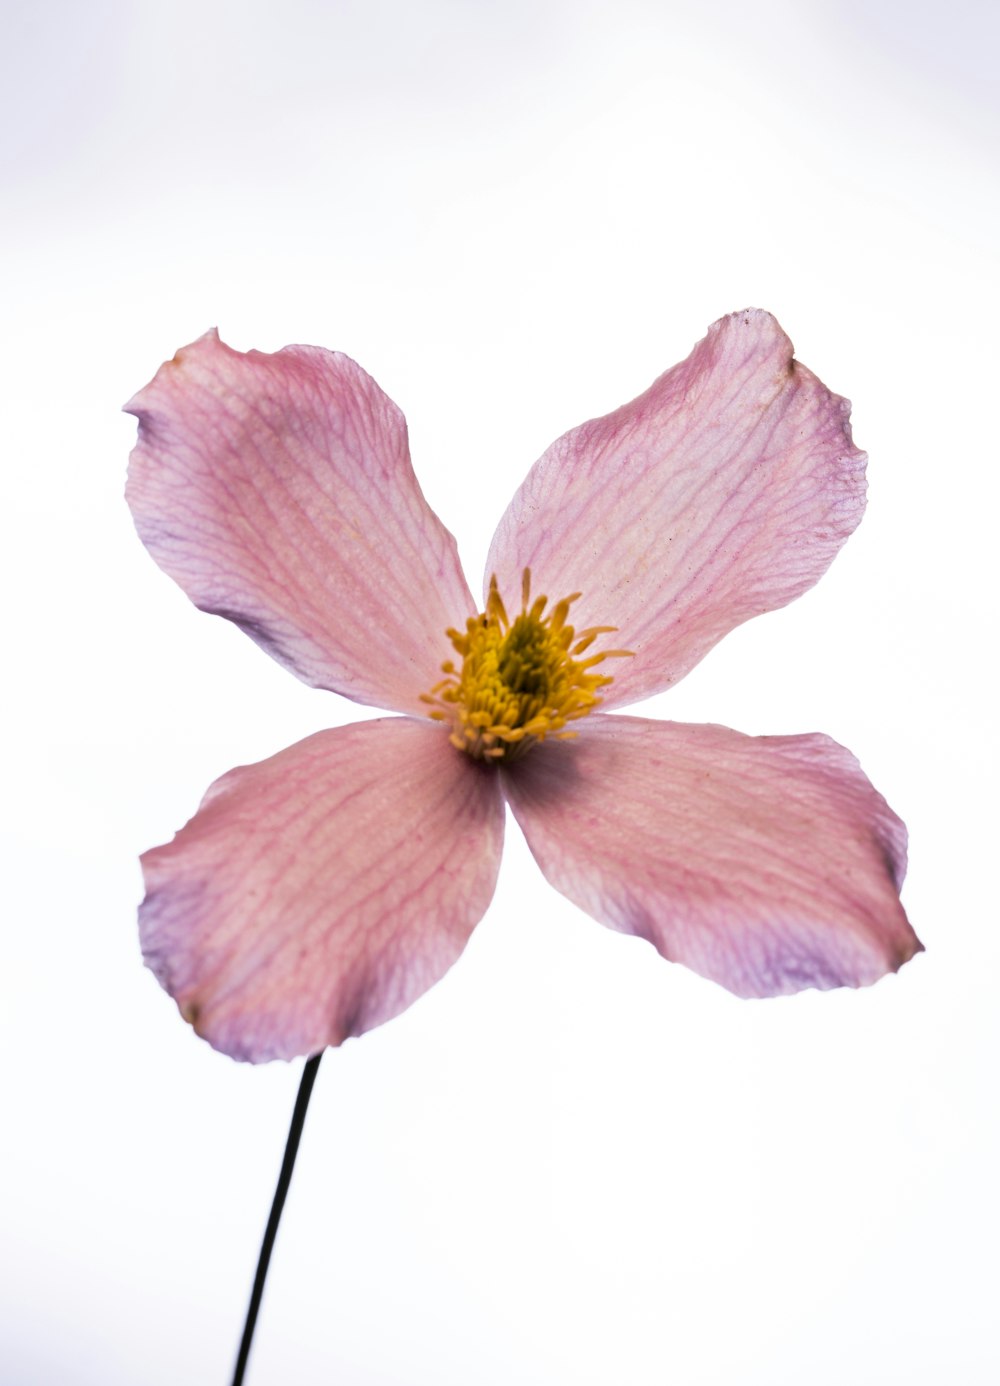 pink flower with yellow stigma